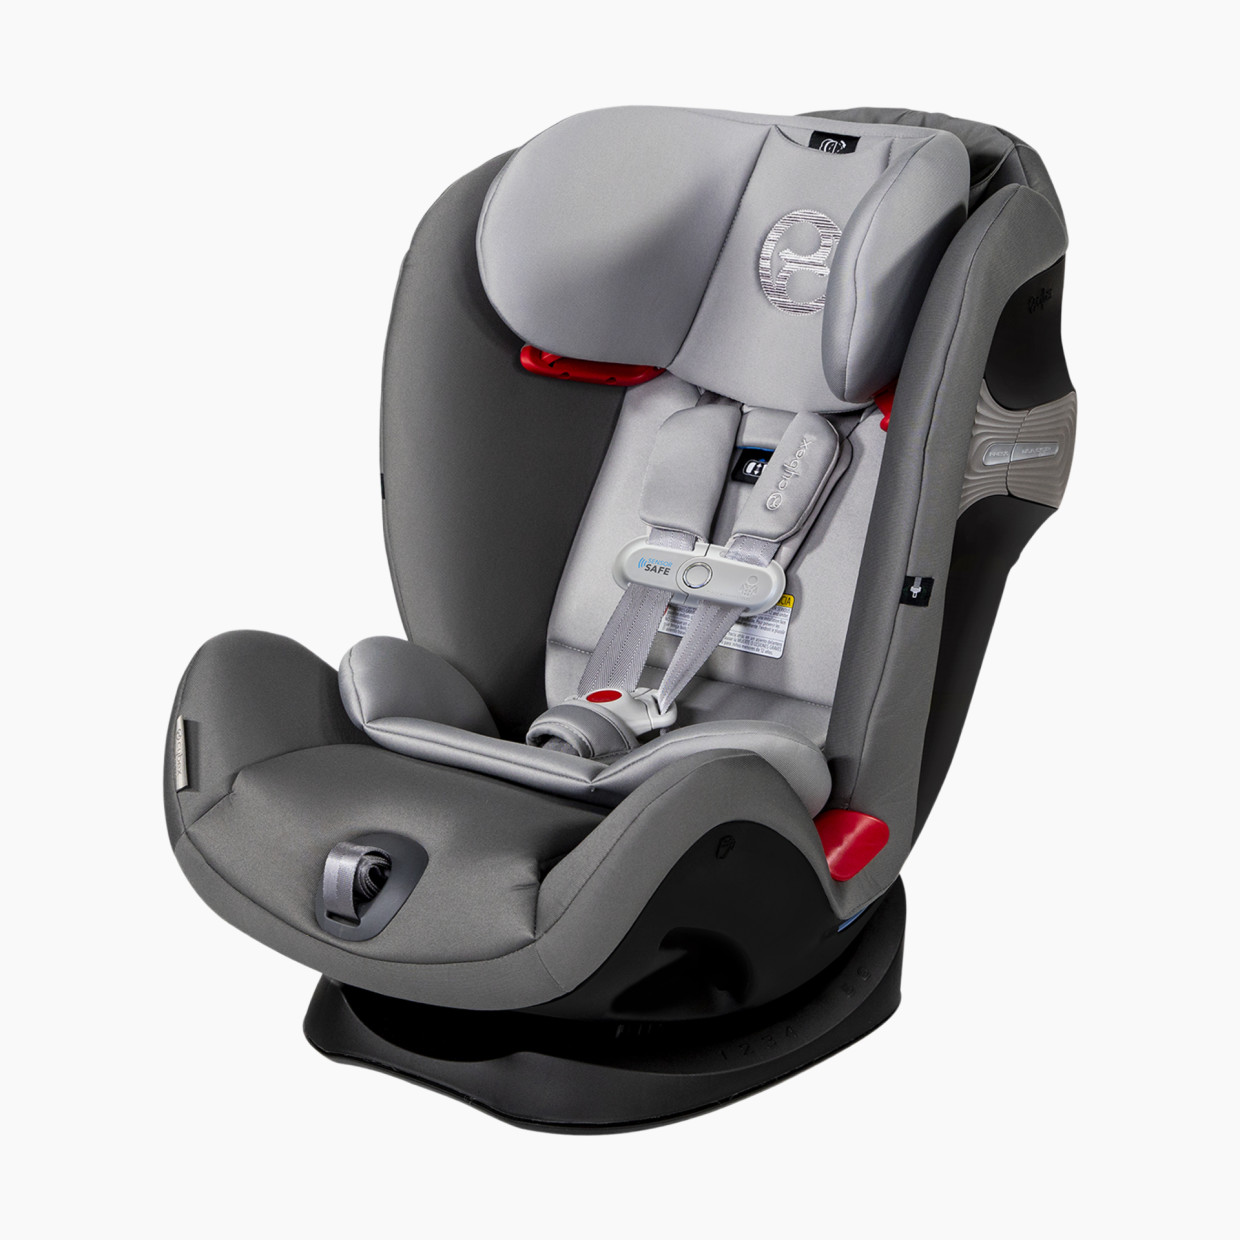 Cybex Eternis S SensorSafe All-in-One Convertible Car Seat - Manhattan Grey.